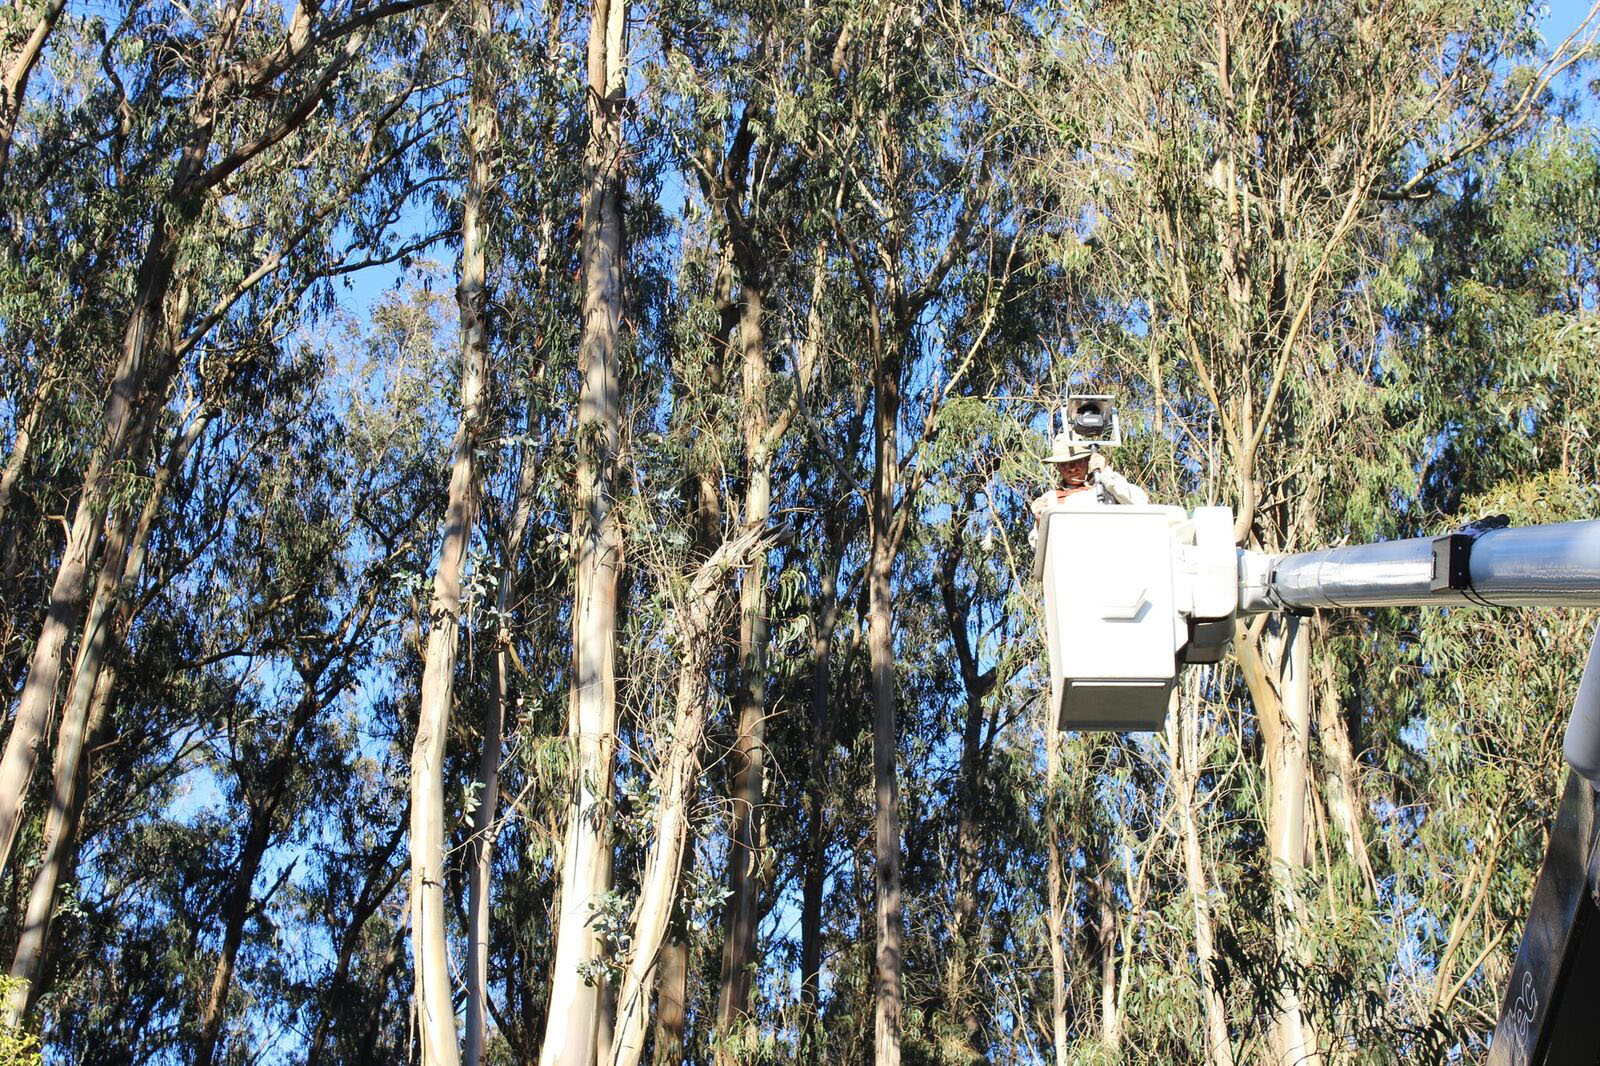 Man up in cherry picker in the presidio amongst eucalyptus trees.